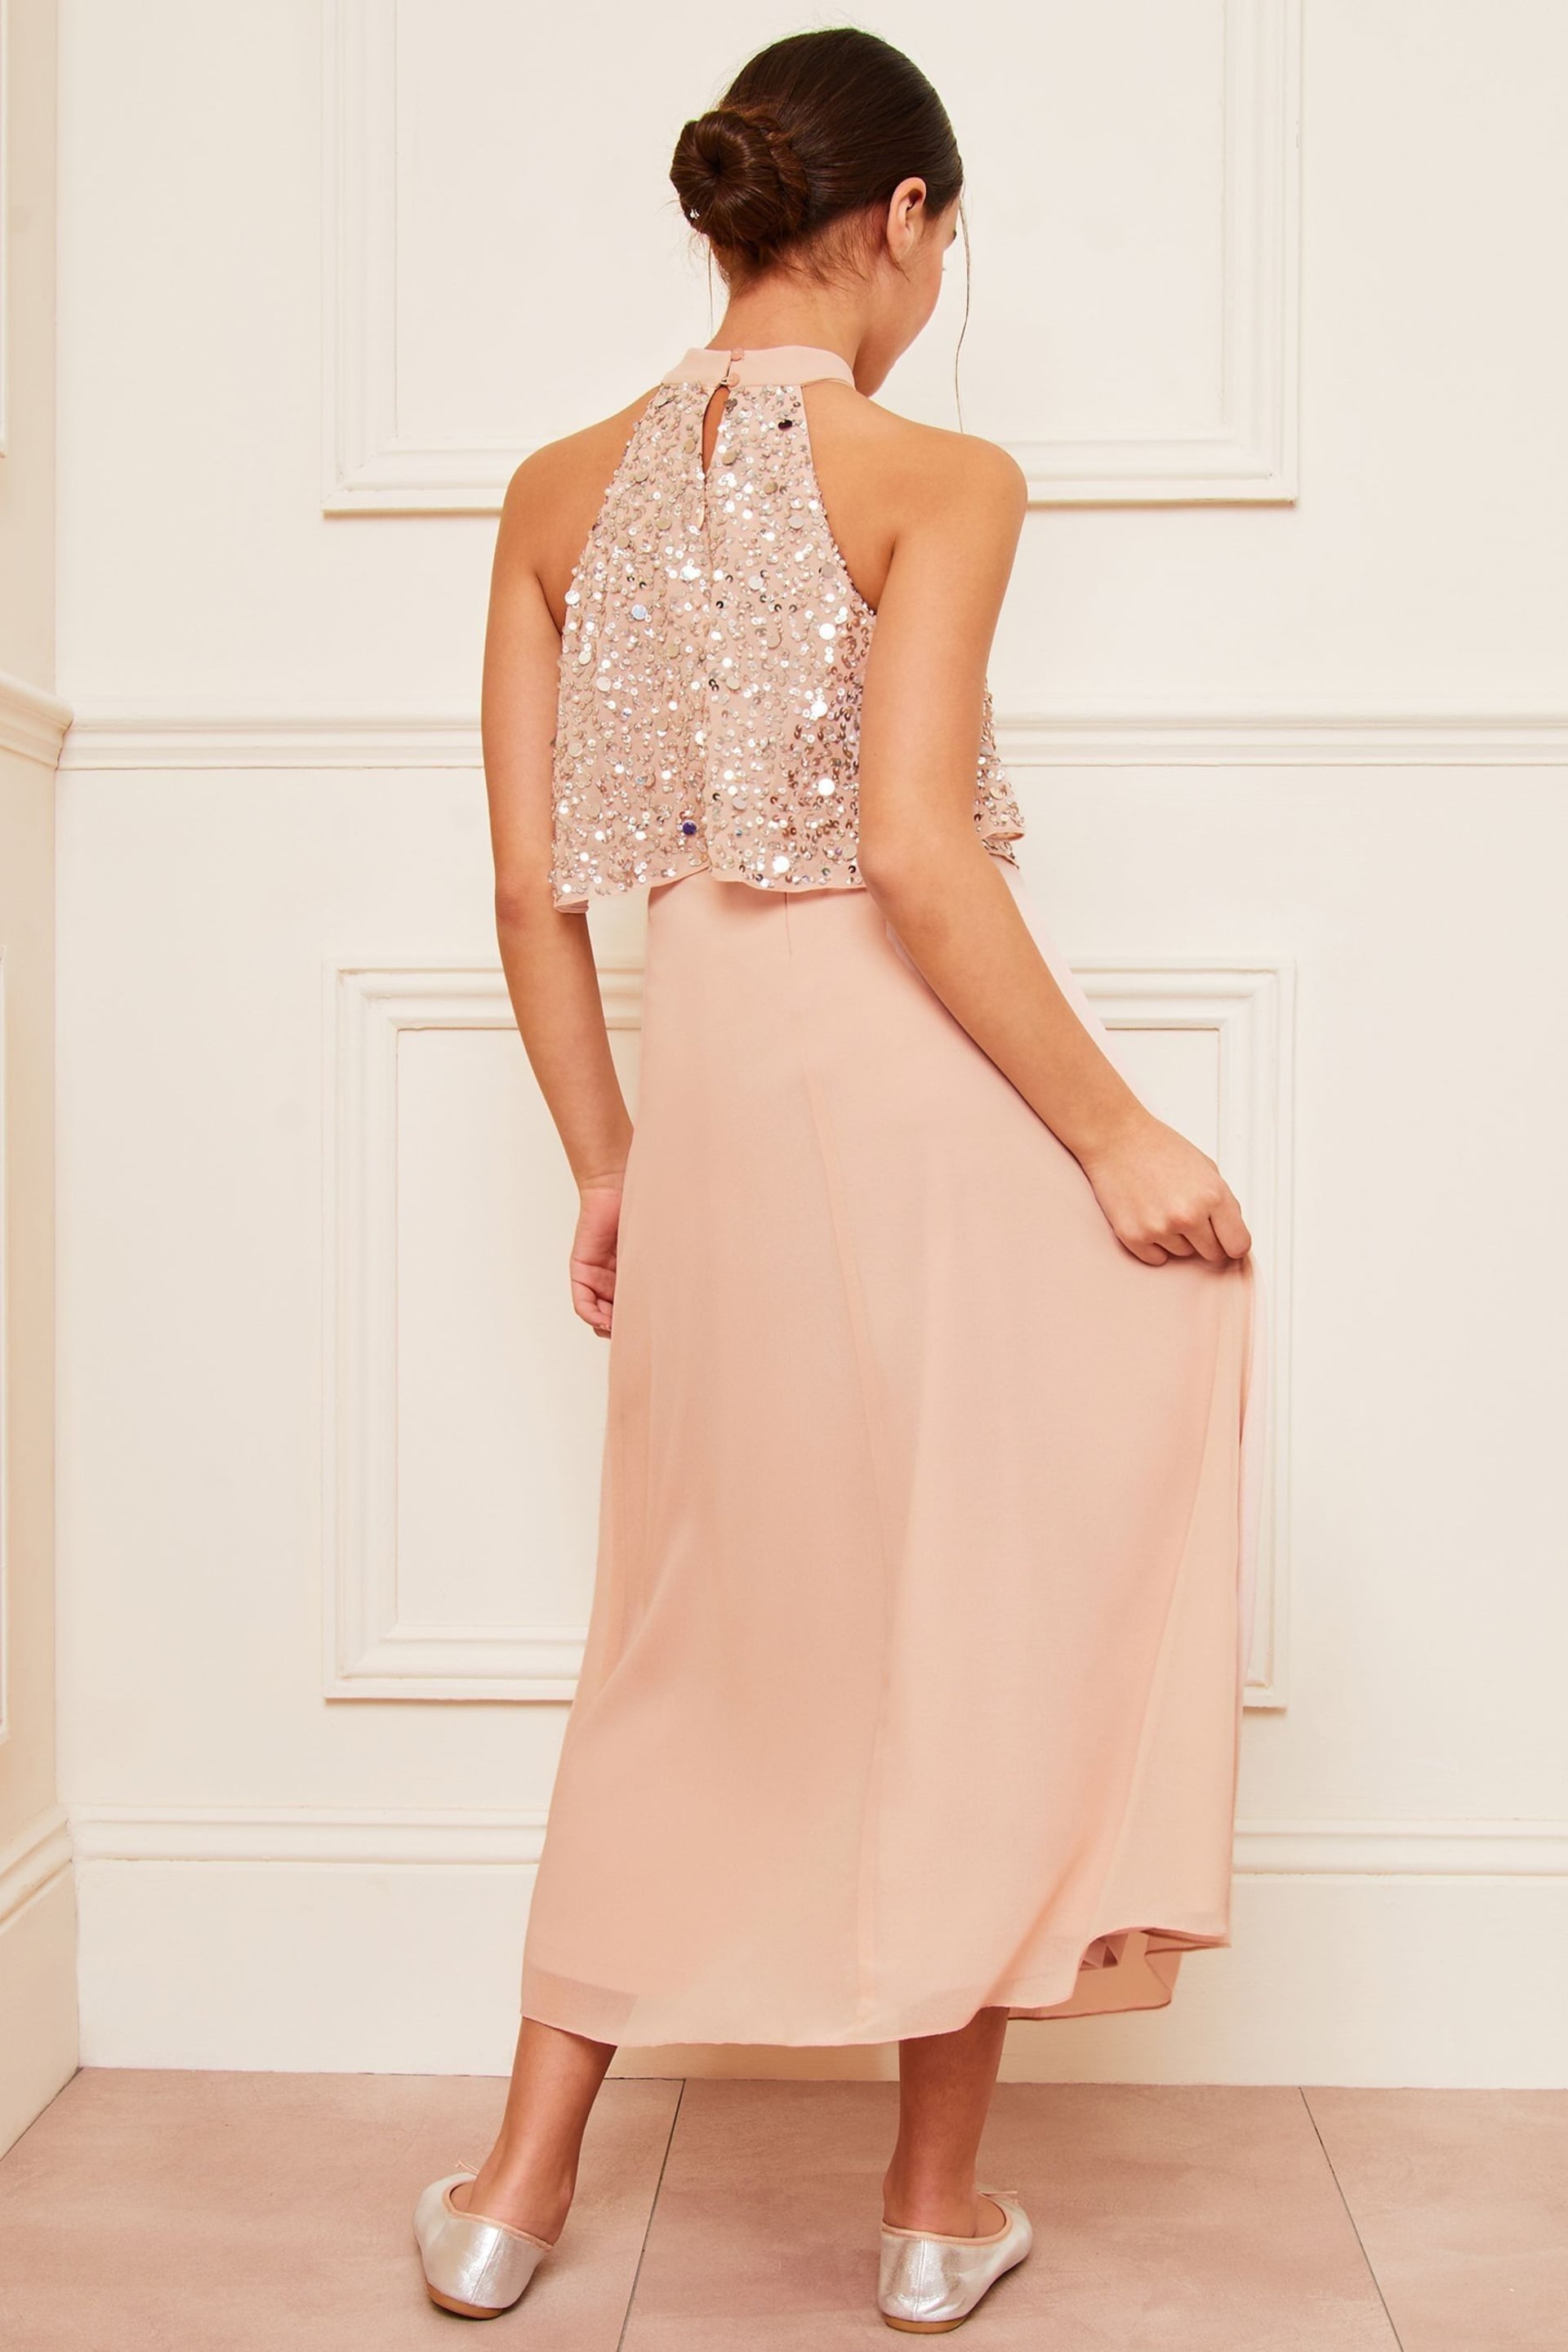 Lipsy Pink Teen Embellished Halter Occasion Skirt Dress (10-16yrs) - Image 4 of 4